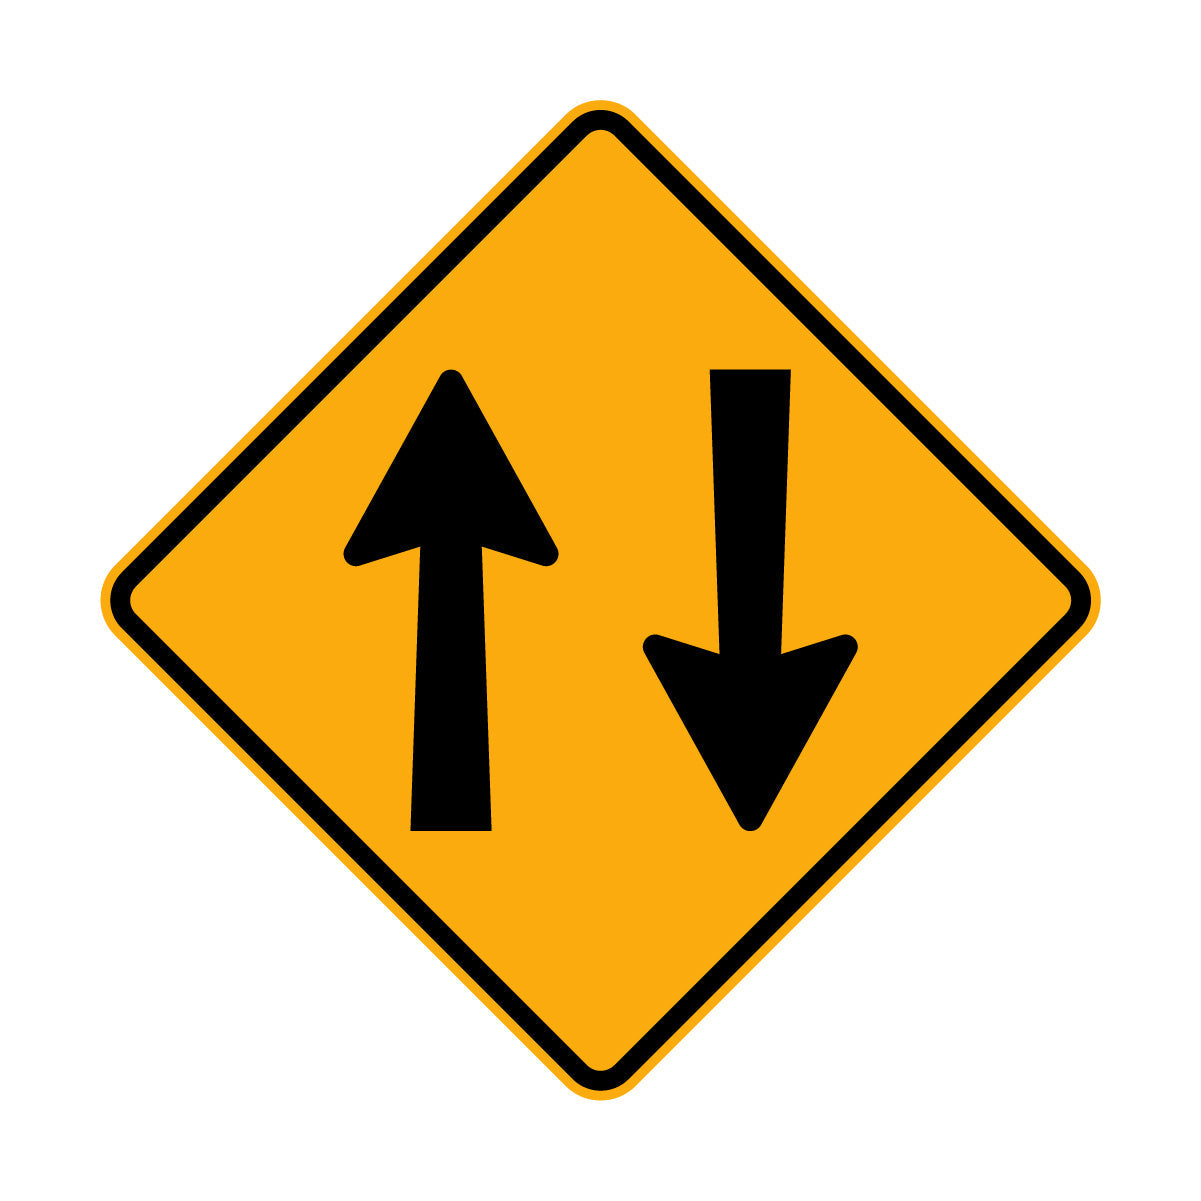 Warning: Two Way Road Sign